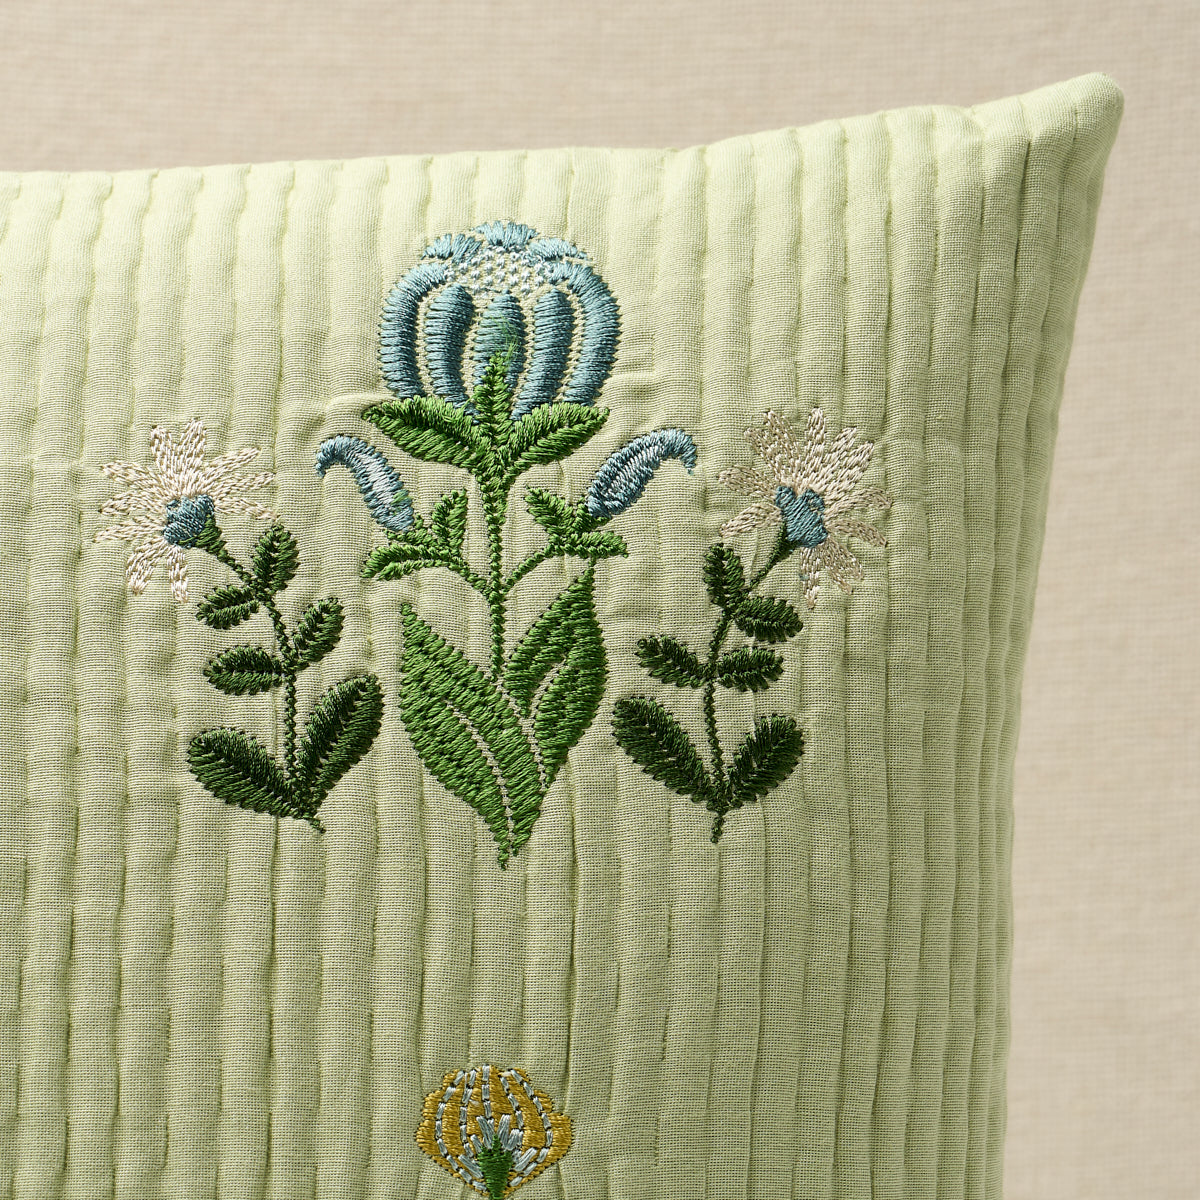 Elmslie Embroidery Pillow | Leaf